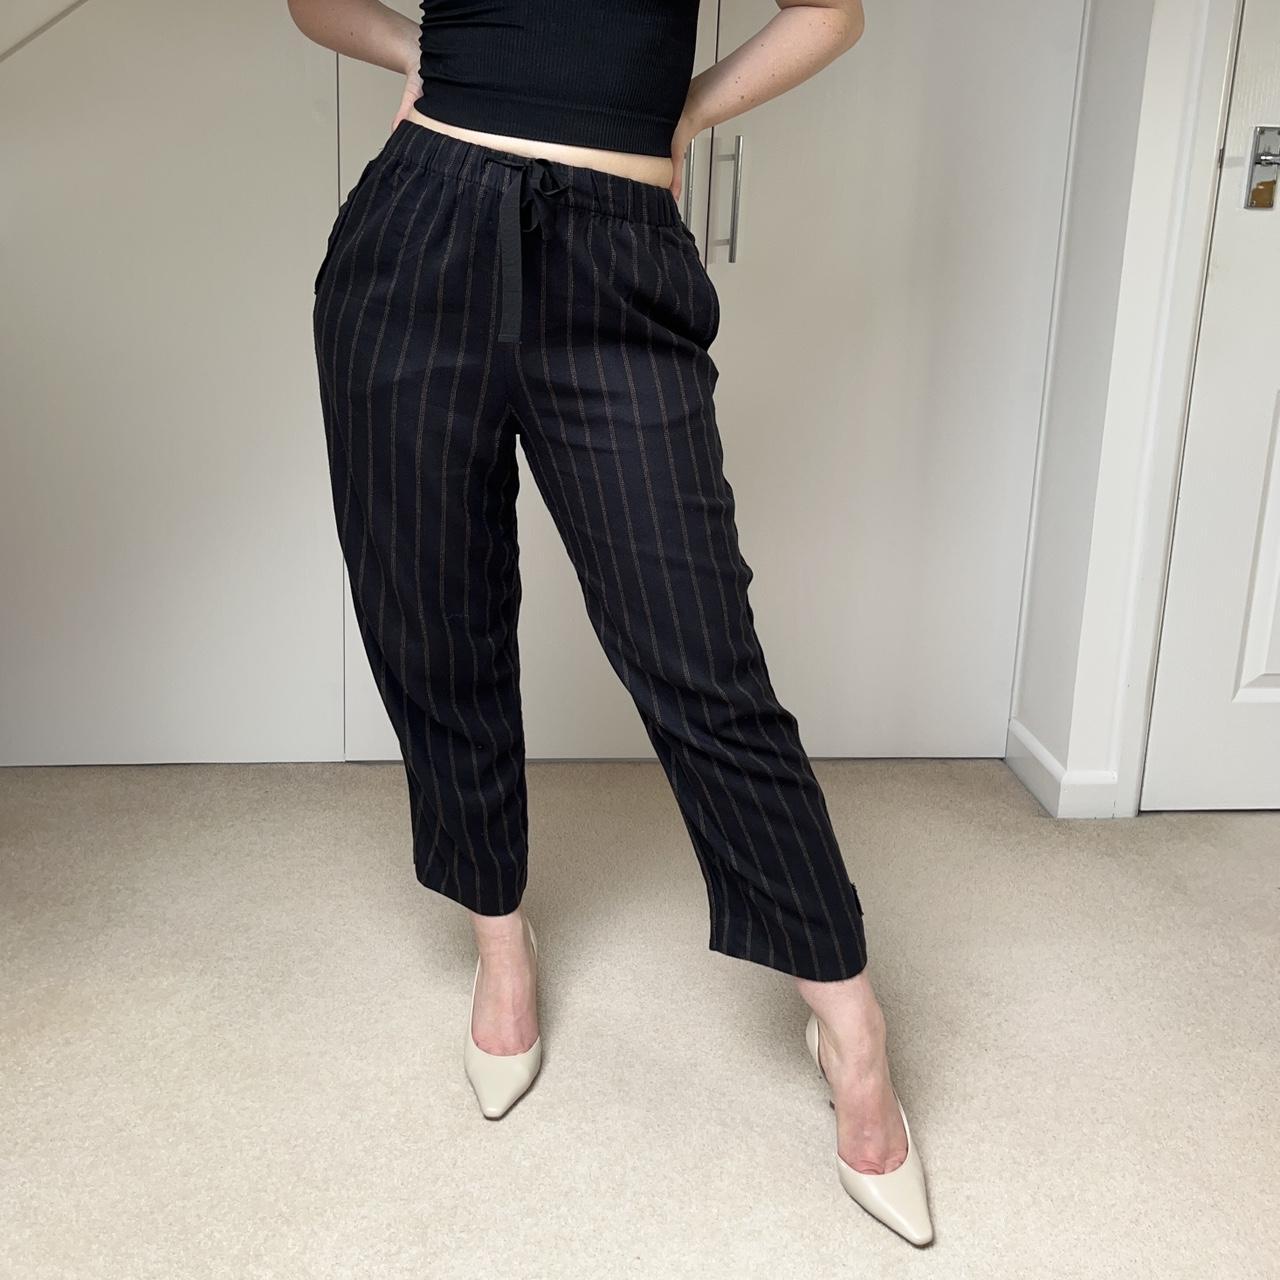 zara size eur L black flare-leg trousers with stripe and sparkle detail |  eBay